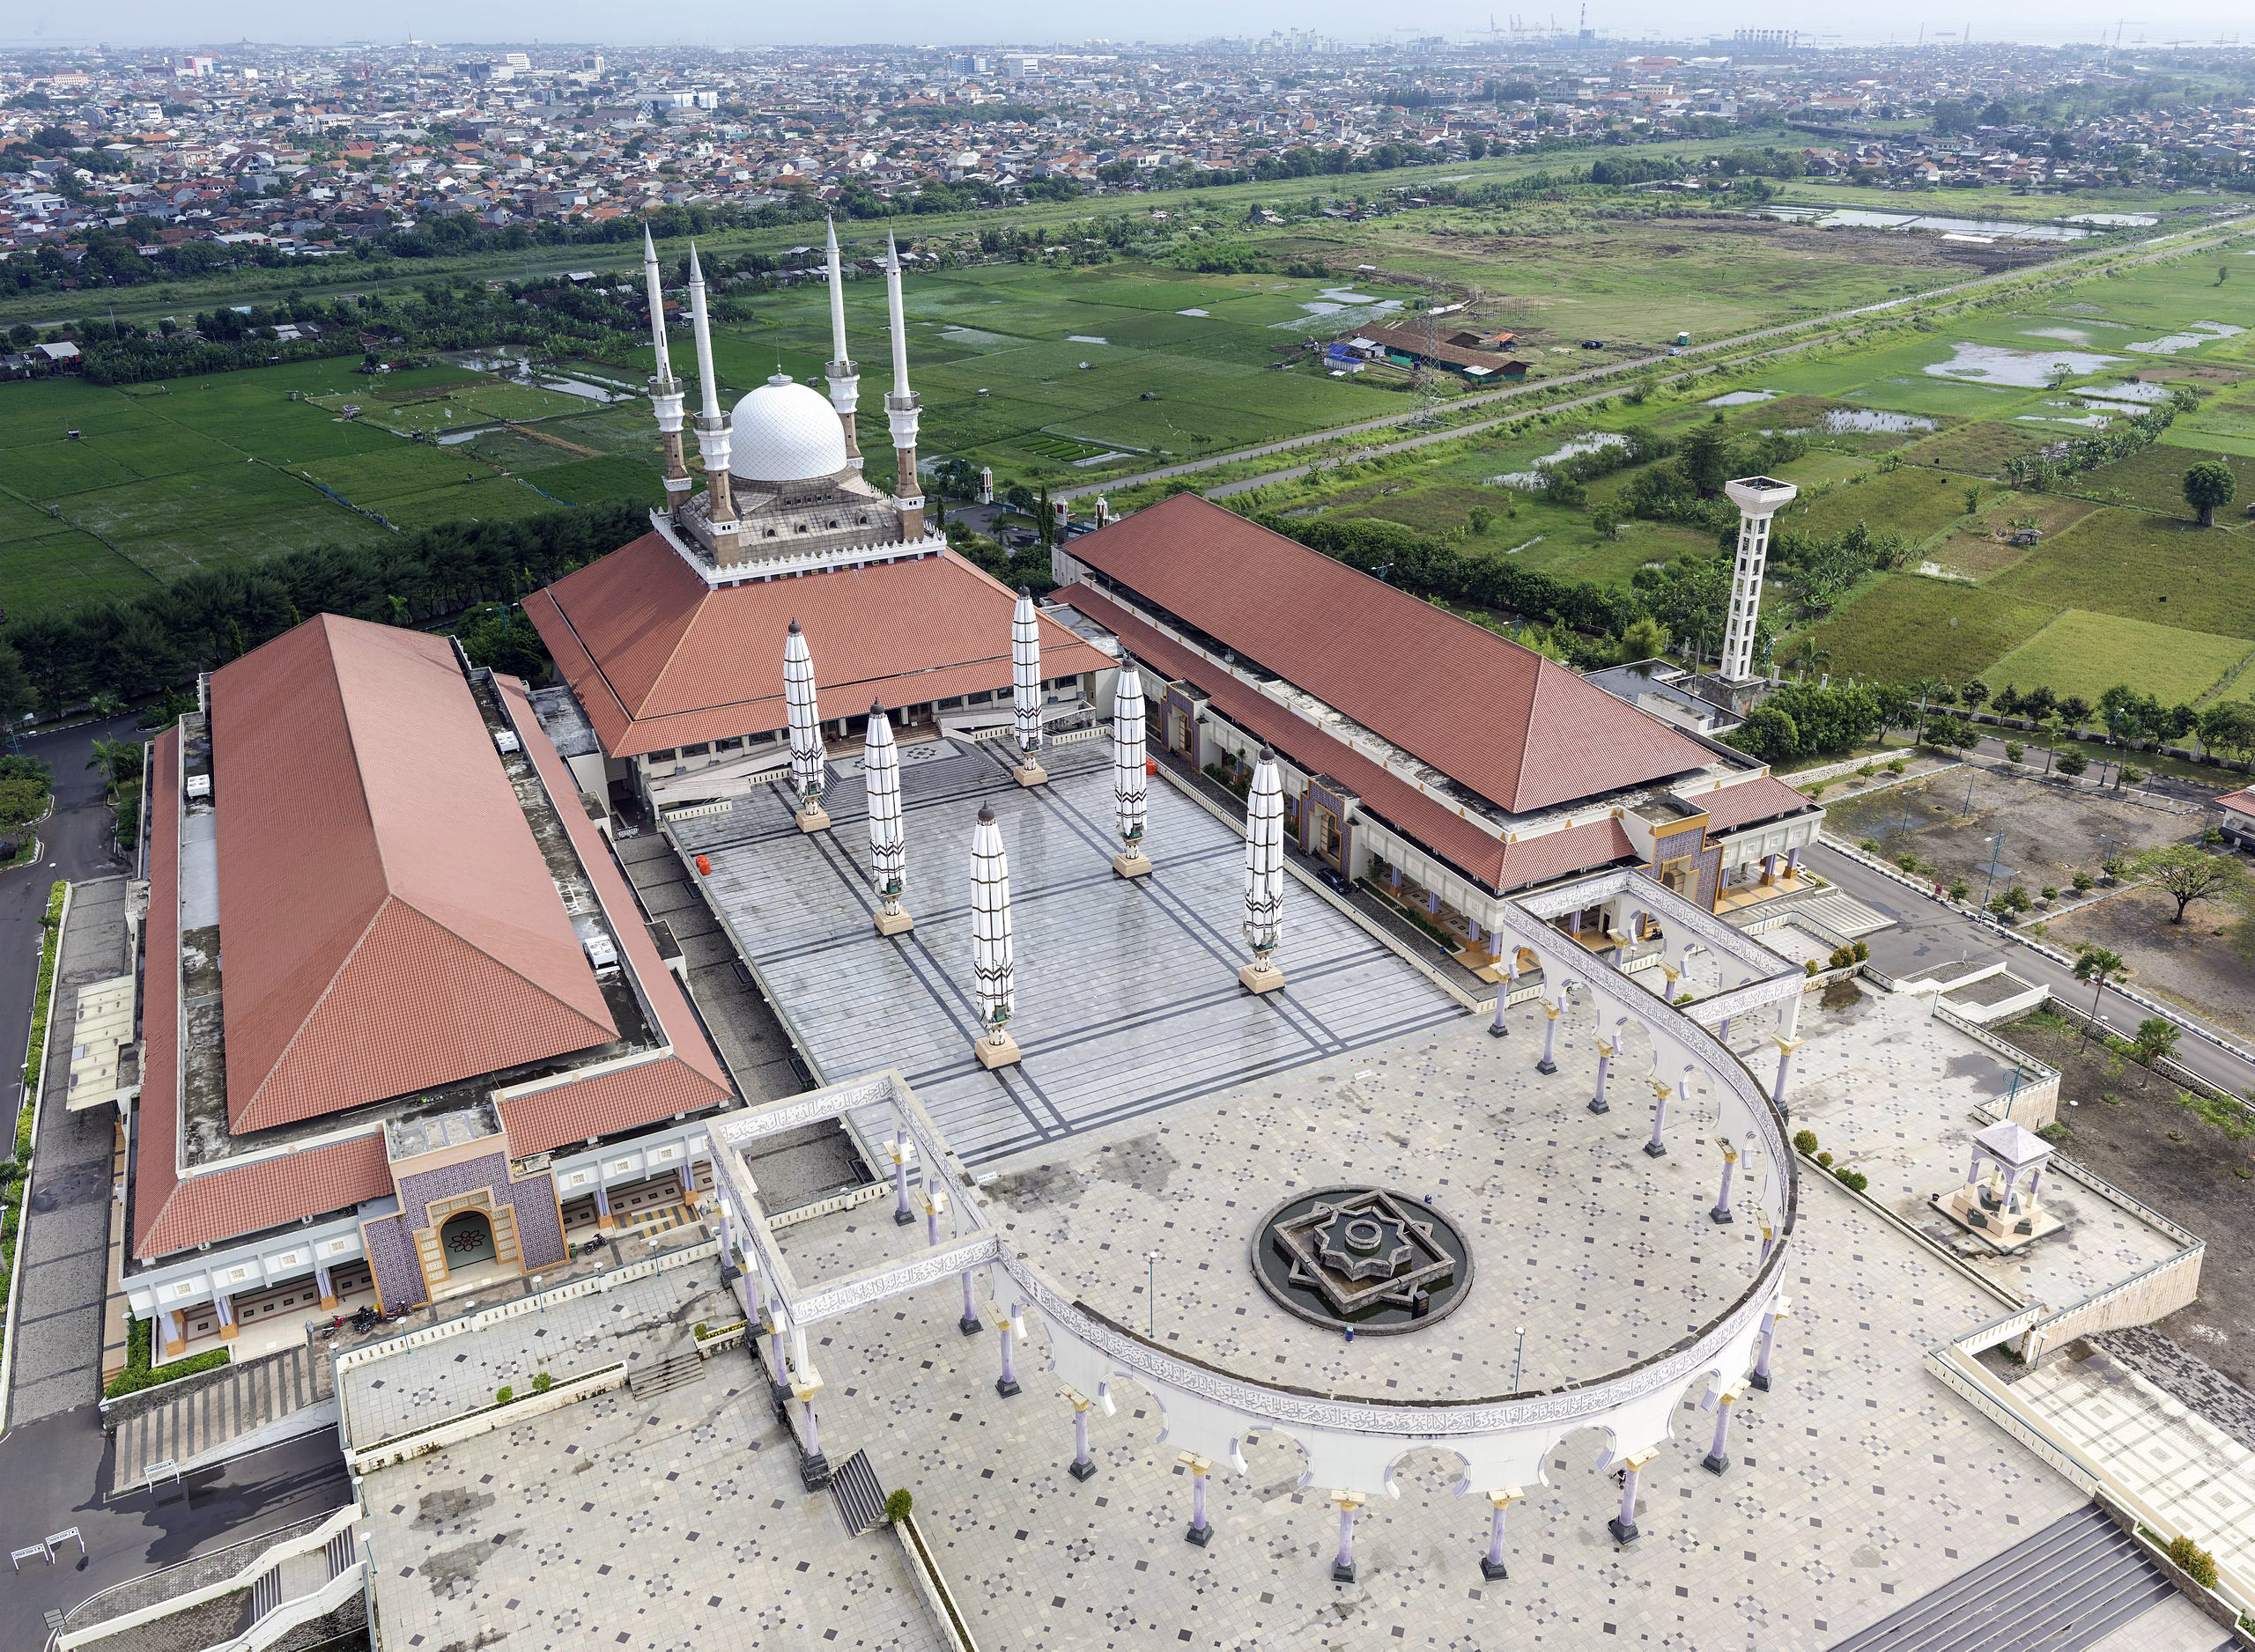 The Great Mosque of Central Java (Masjid Agung Jawa Tengah), Semarang, Central Java, Indonesia, 2002–2006 (photo: Christ Woodrich, CC BY-SA 3.0)